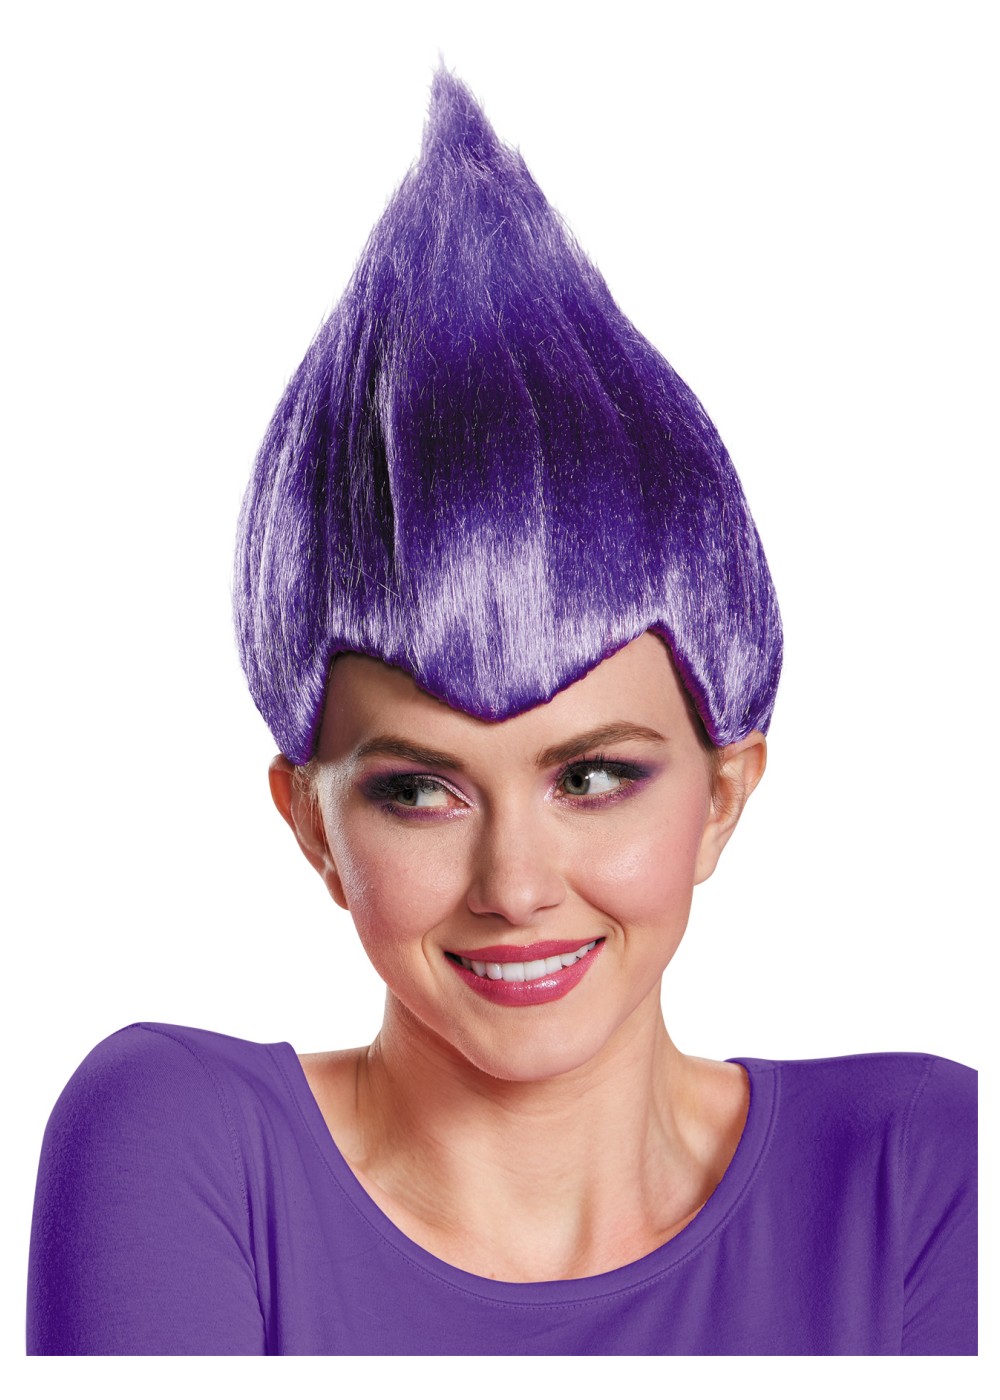 Wacky Purple Wig